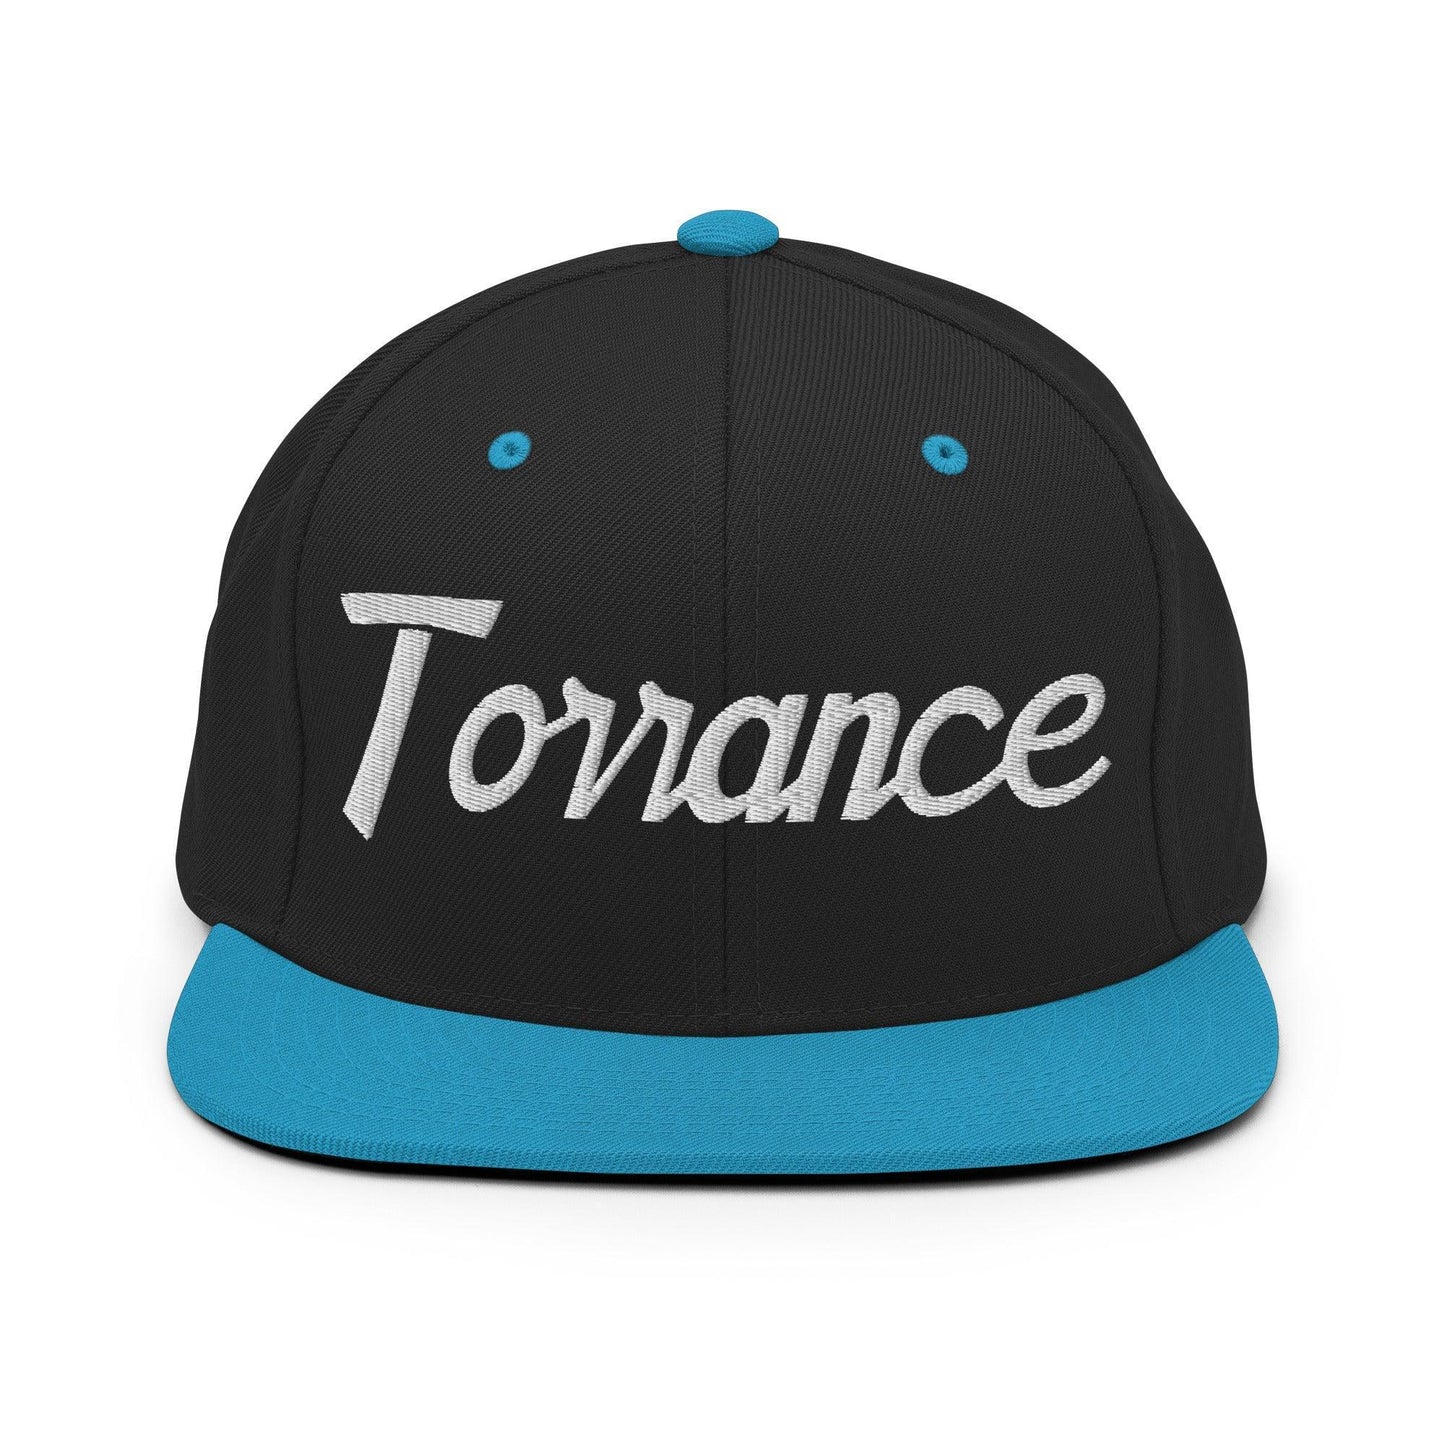 Torrance Script Snapback Hat Black Teal